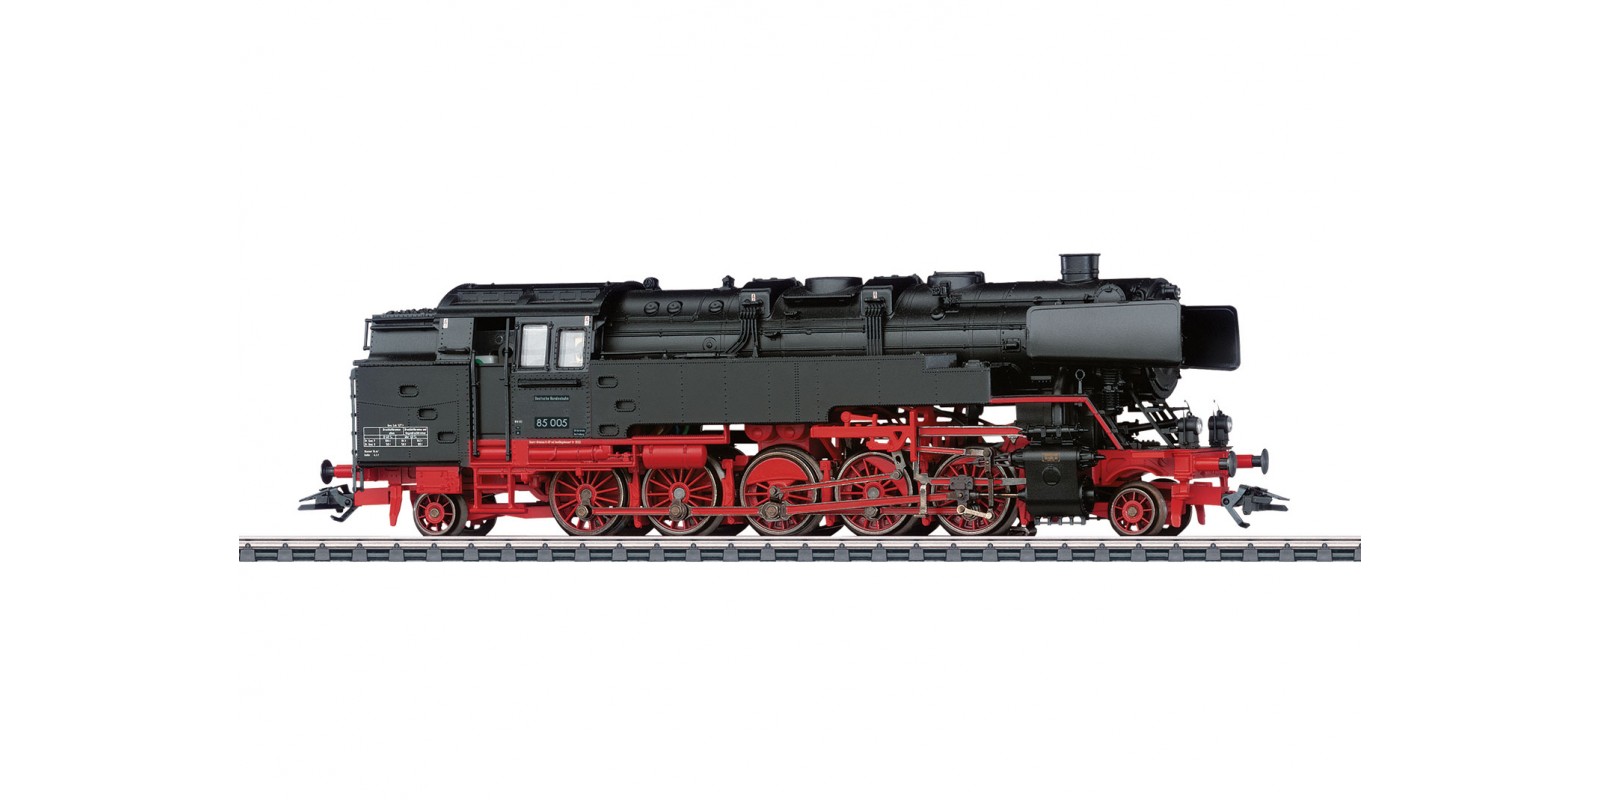 37099 Class 85 Freight Steam Locomotive